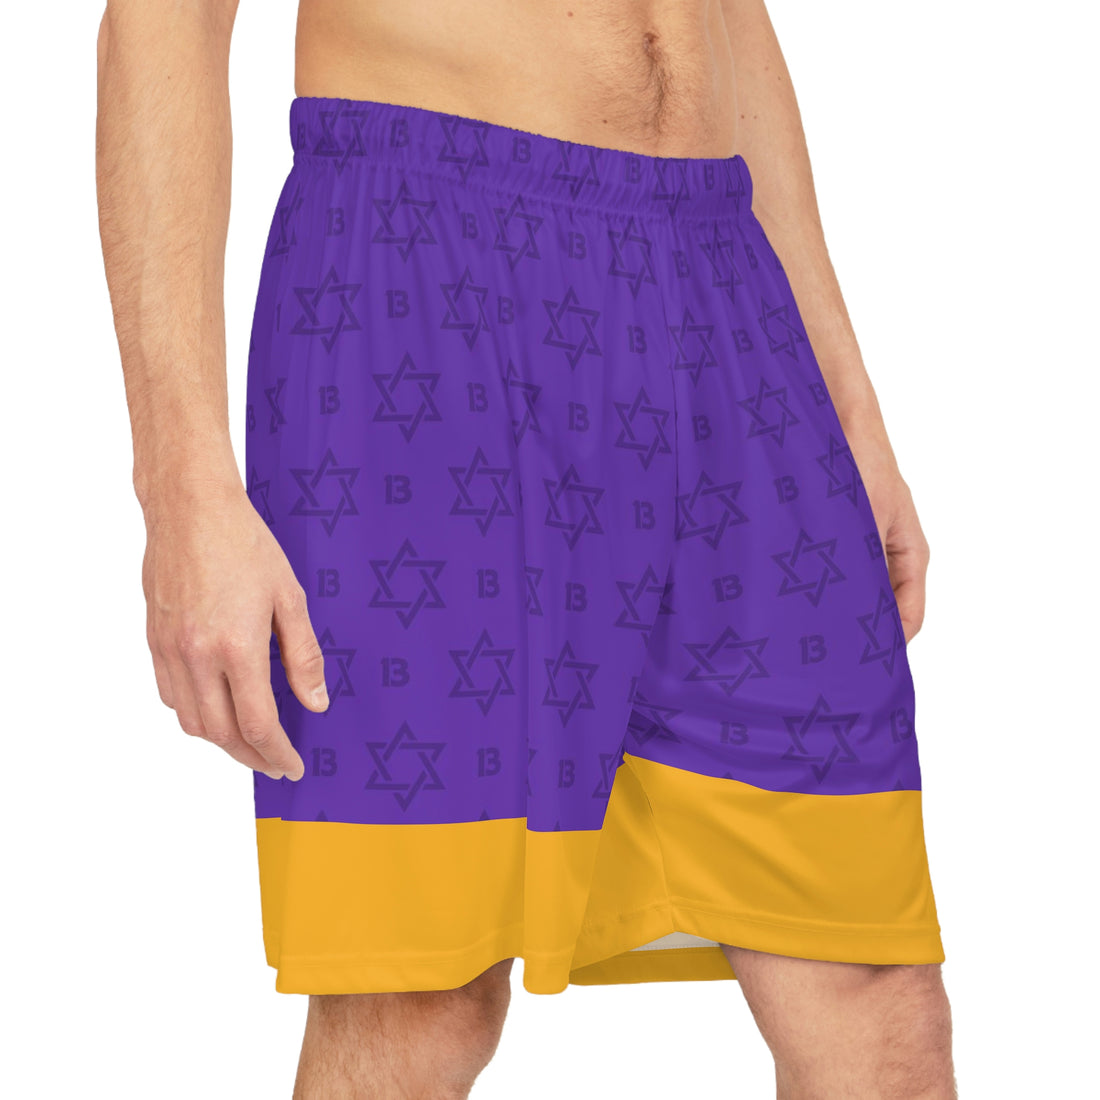 Father Yod's Team Purple Shorts